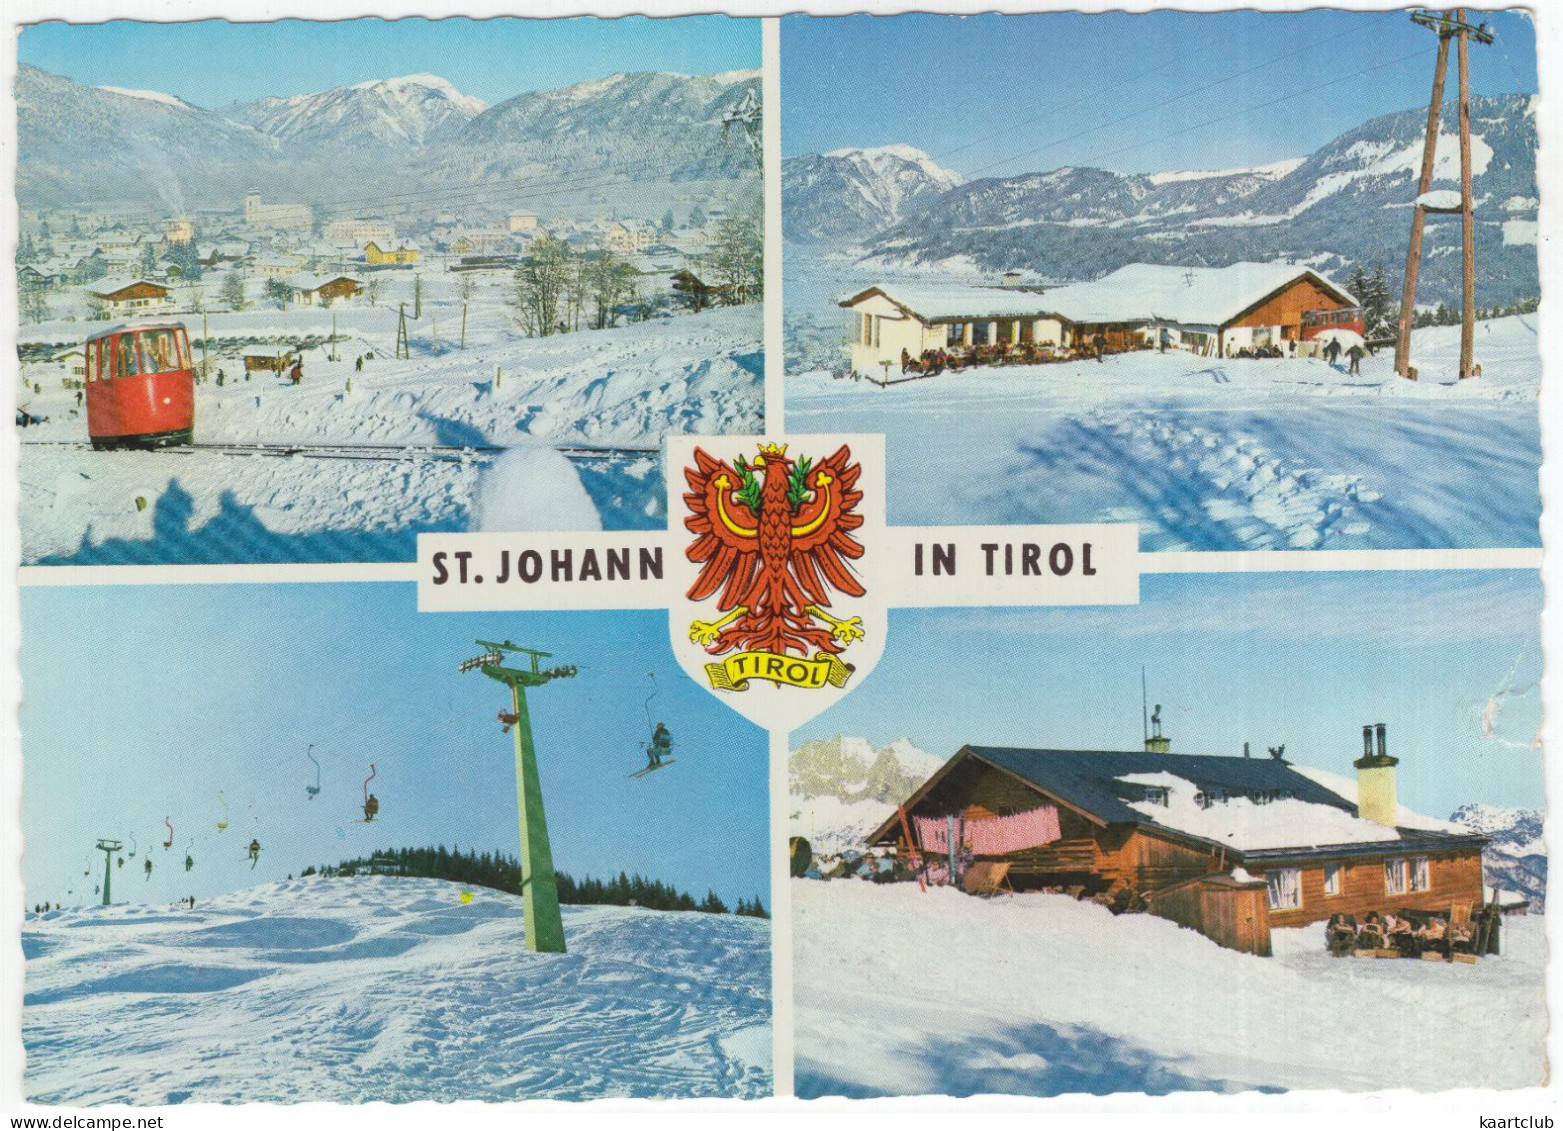 St. Johann Mit Bergbahn, Mittelstation, Sessellift Harschbühel, Angerer-Alm - (Tirol, Österreich/Austria) - St. Johann In Tirol